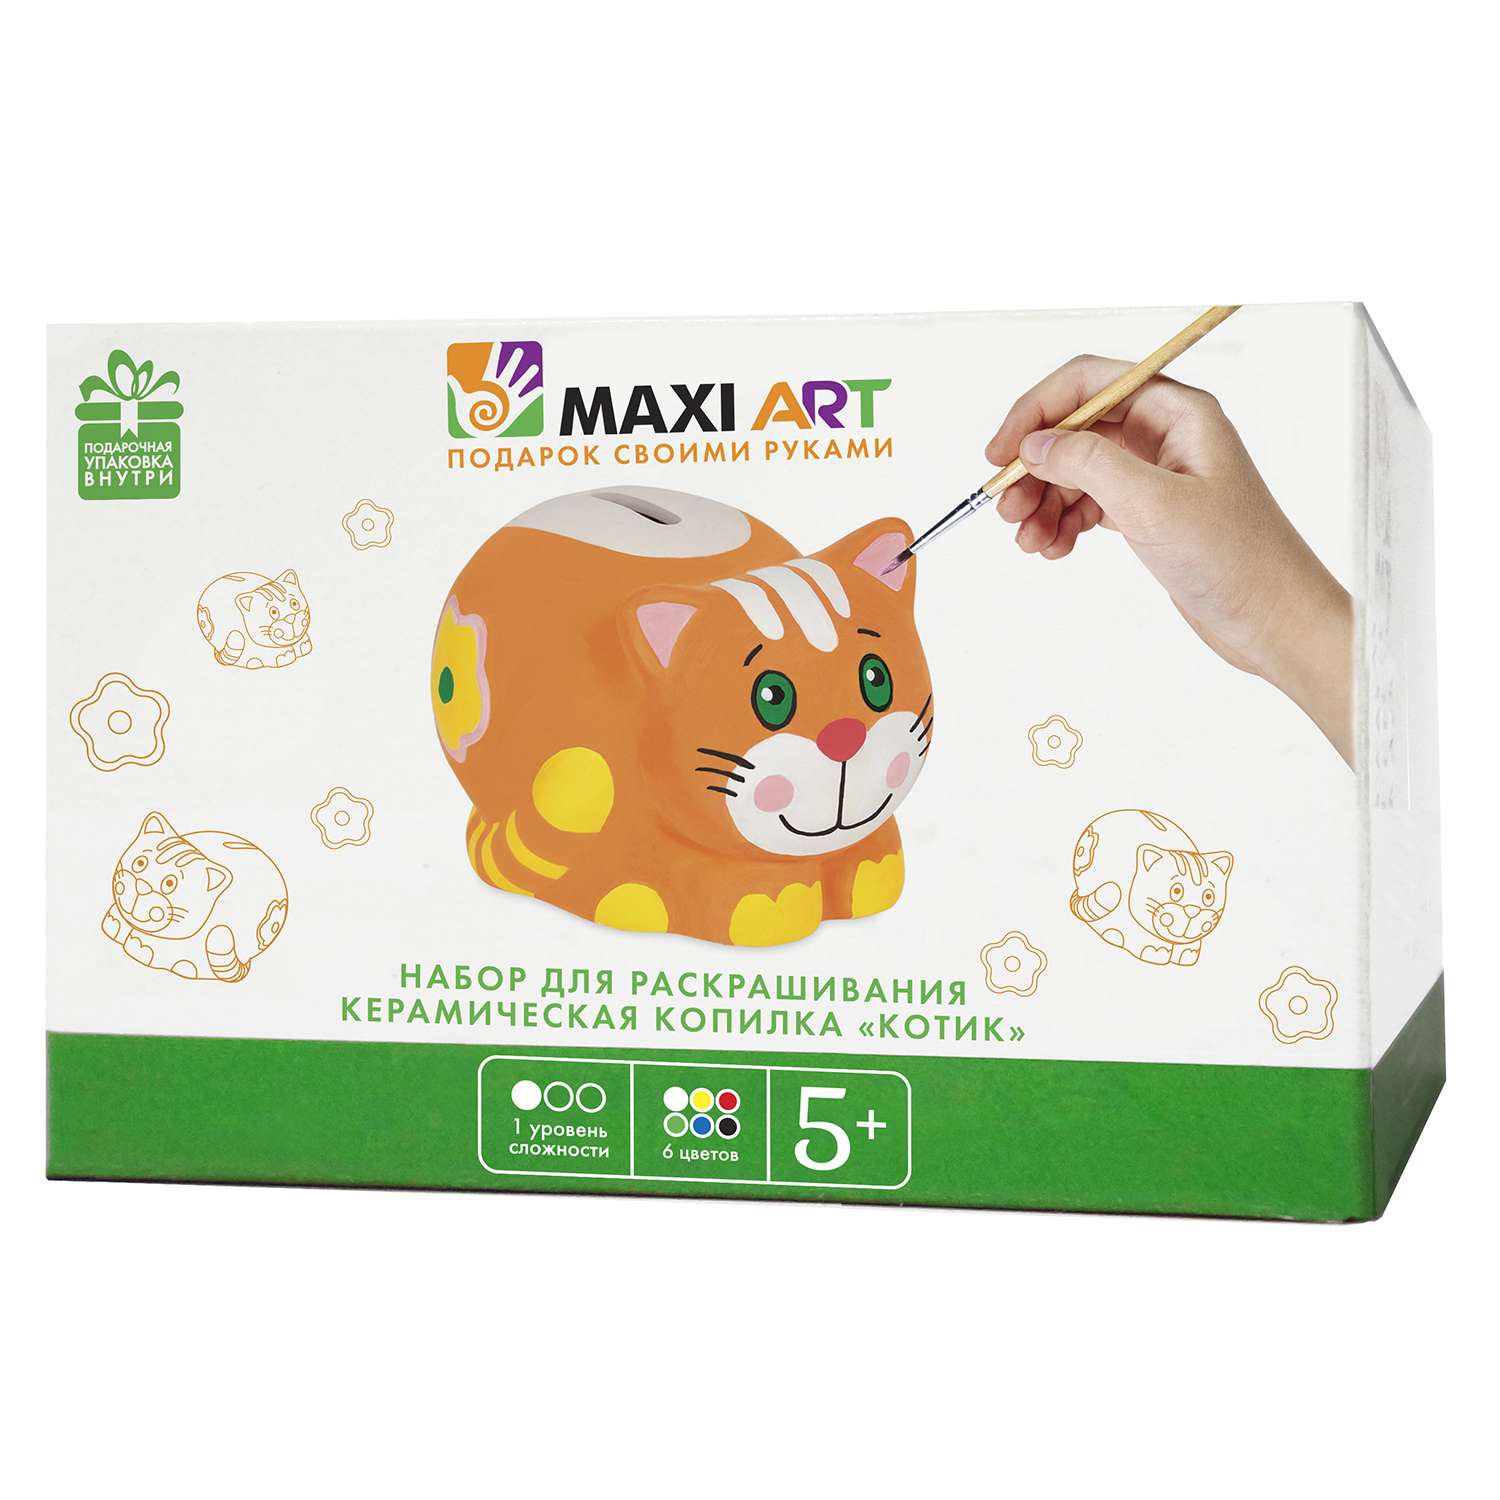 Набор для раскрашивания Maxi Art Керамическая копилка. Котик (MA-CX2470) - фото 1